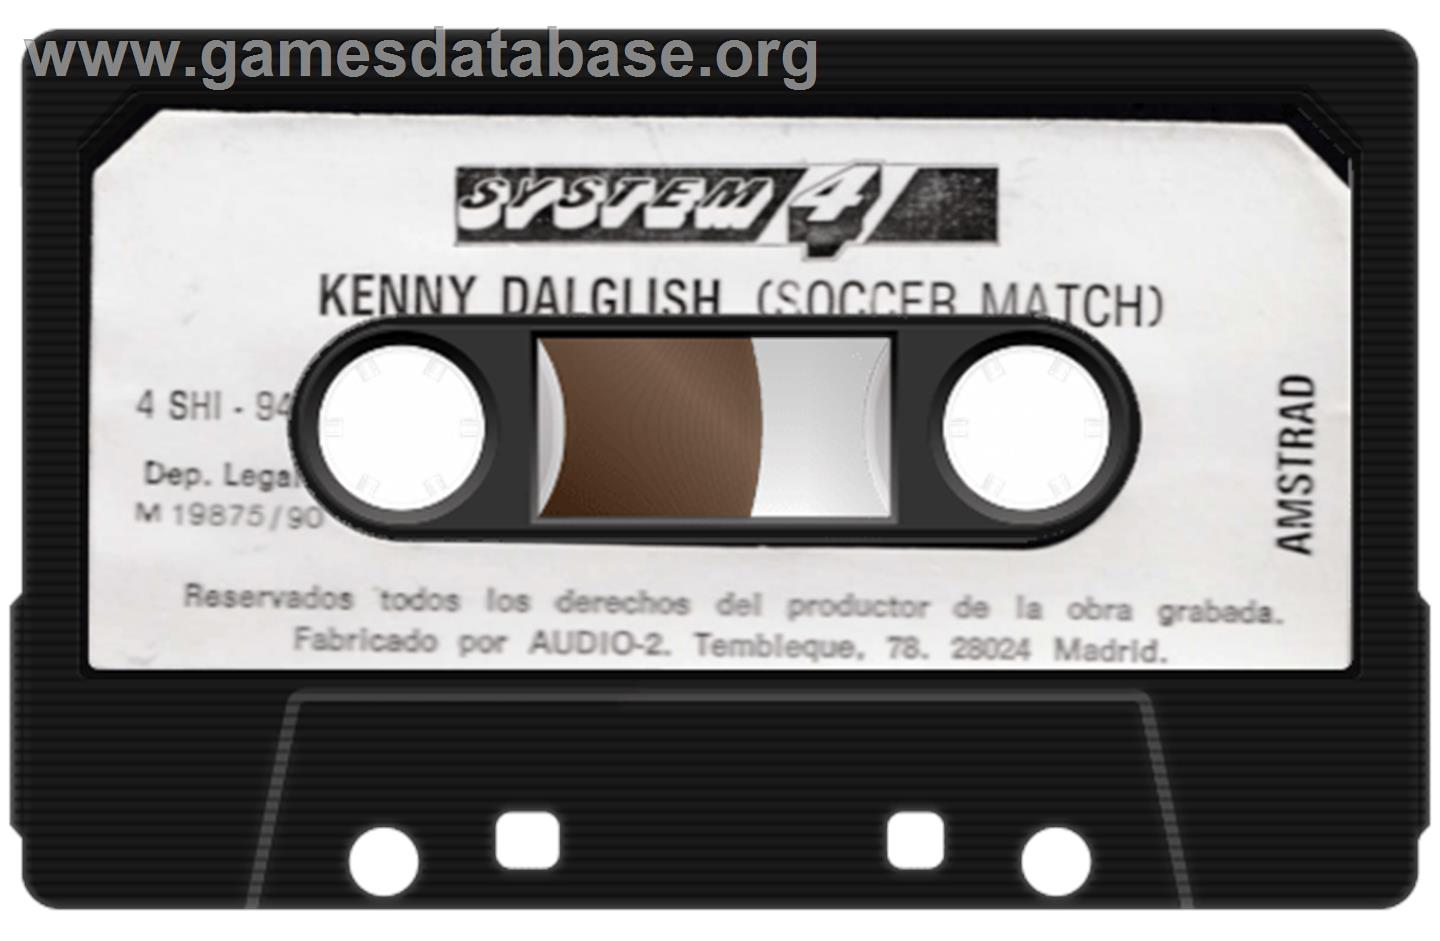 Kenny Dalglish Soccer Match - Amstrad CPC - Artwork - Cartridge